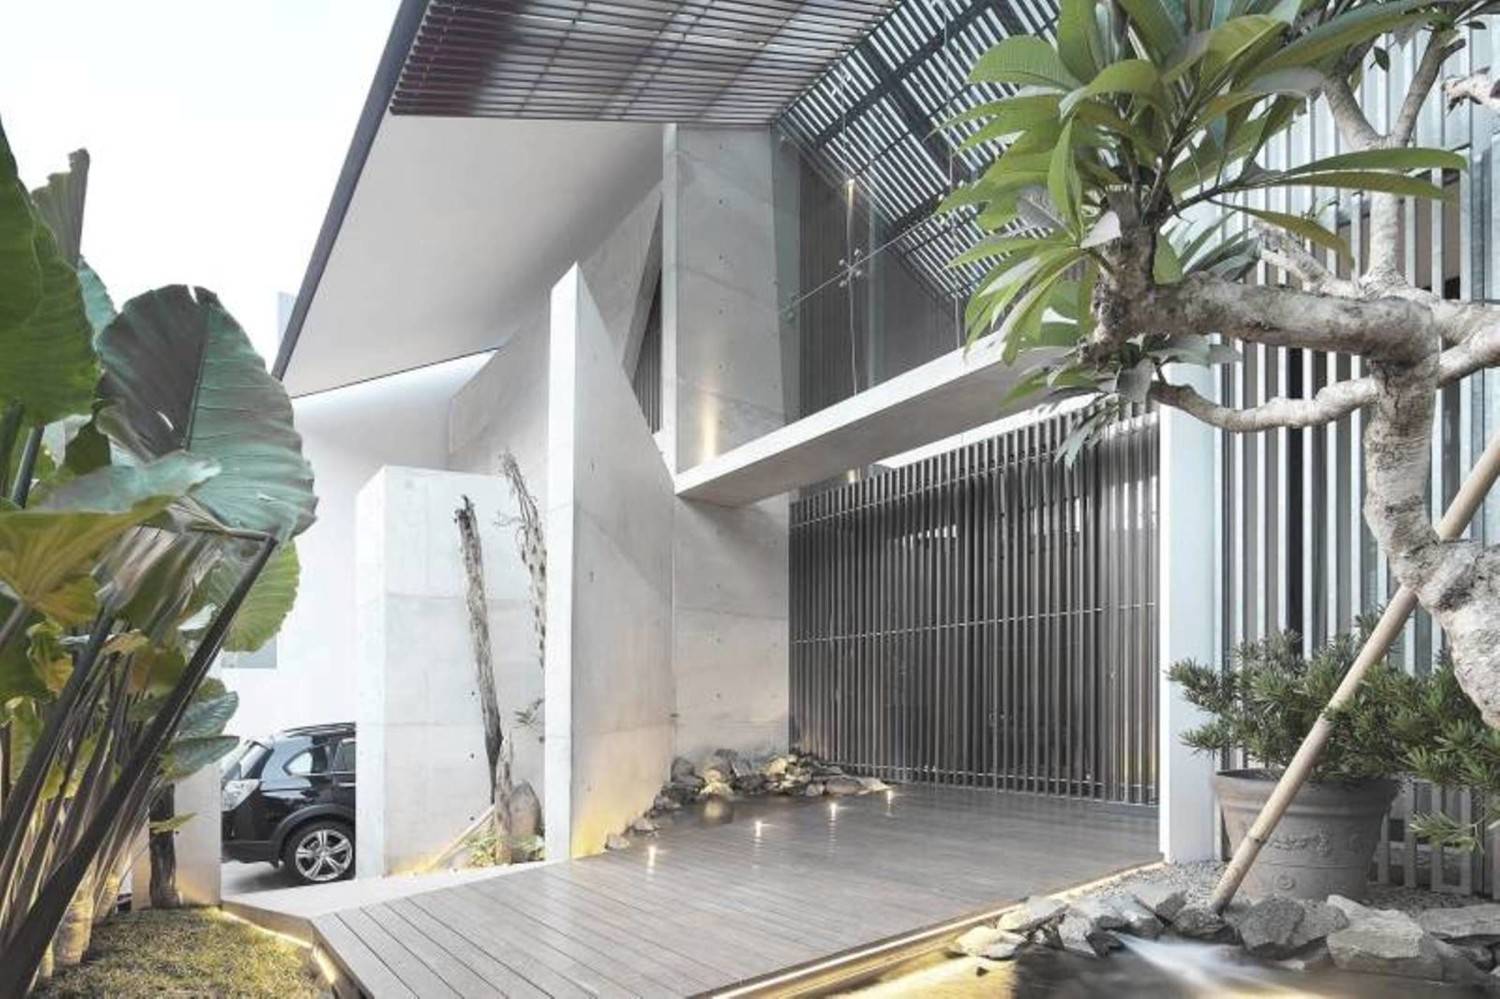 Luxurius Desain Rumah Sederhana Outdoor 66 Di Ide Dekorasi Rumah dengan Desain Rumah Sederhana Outdoor